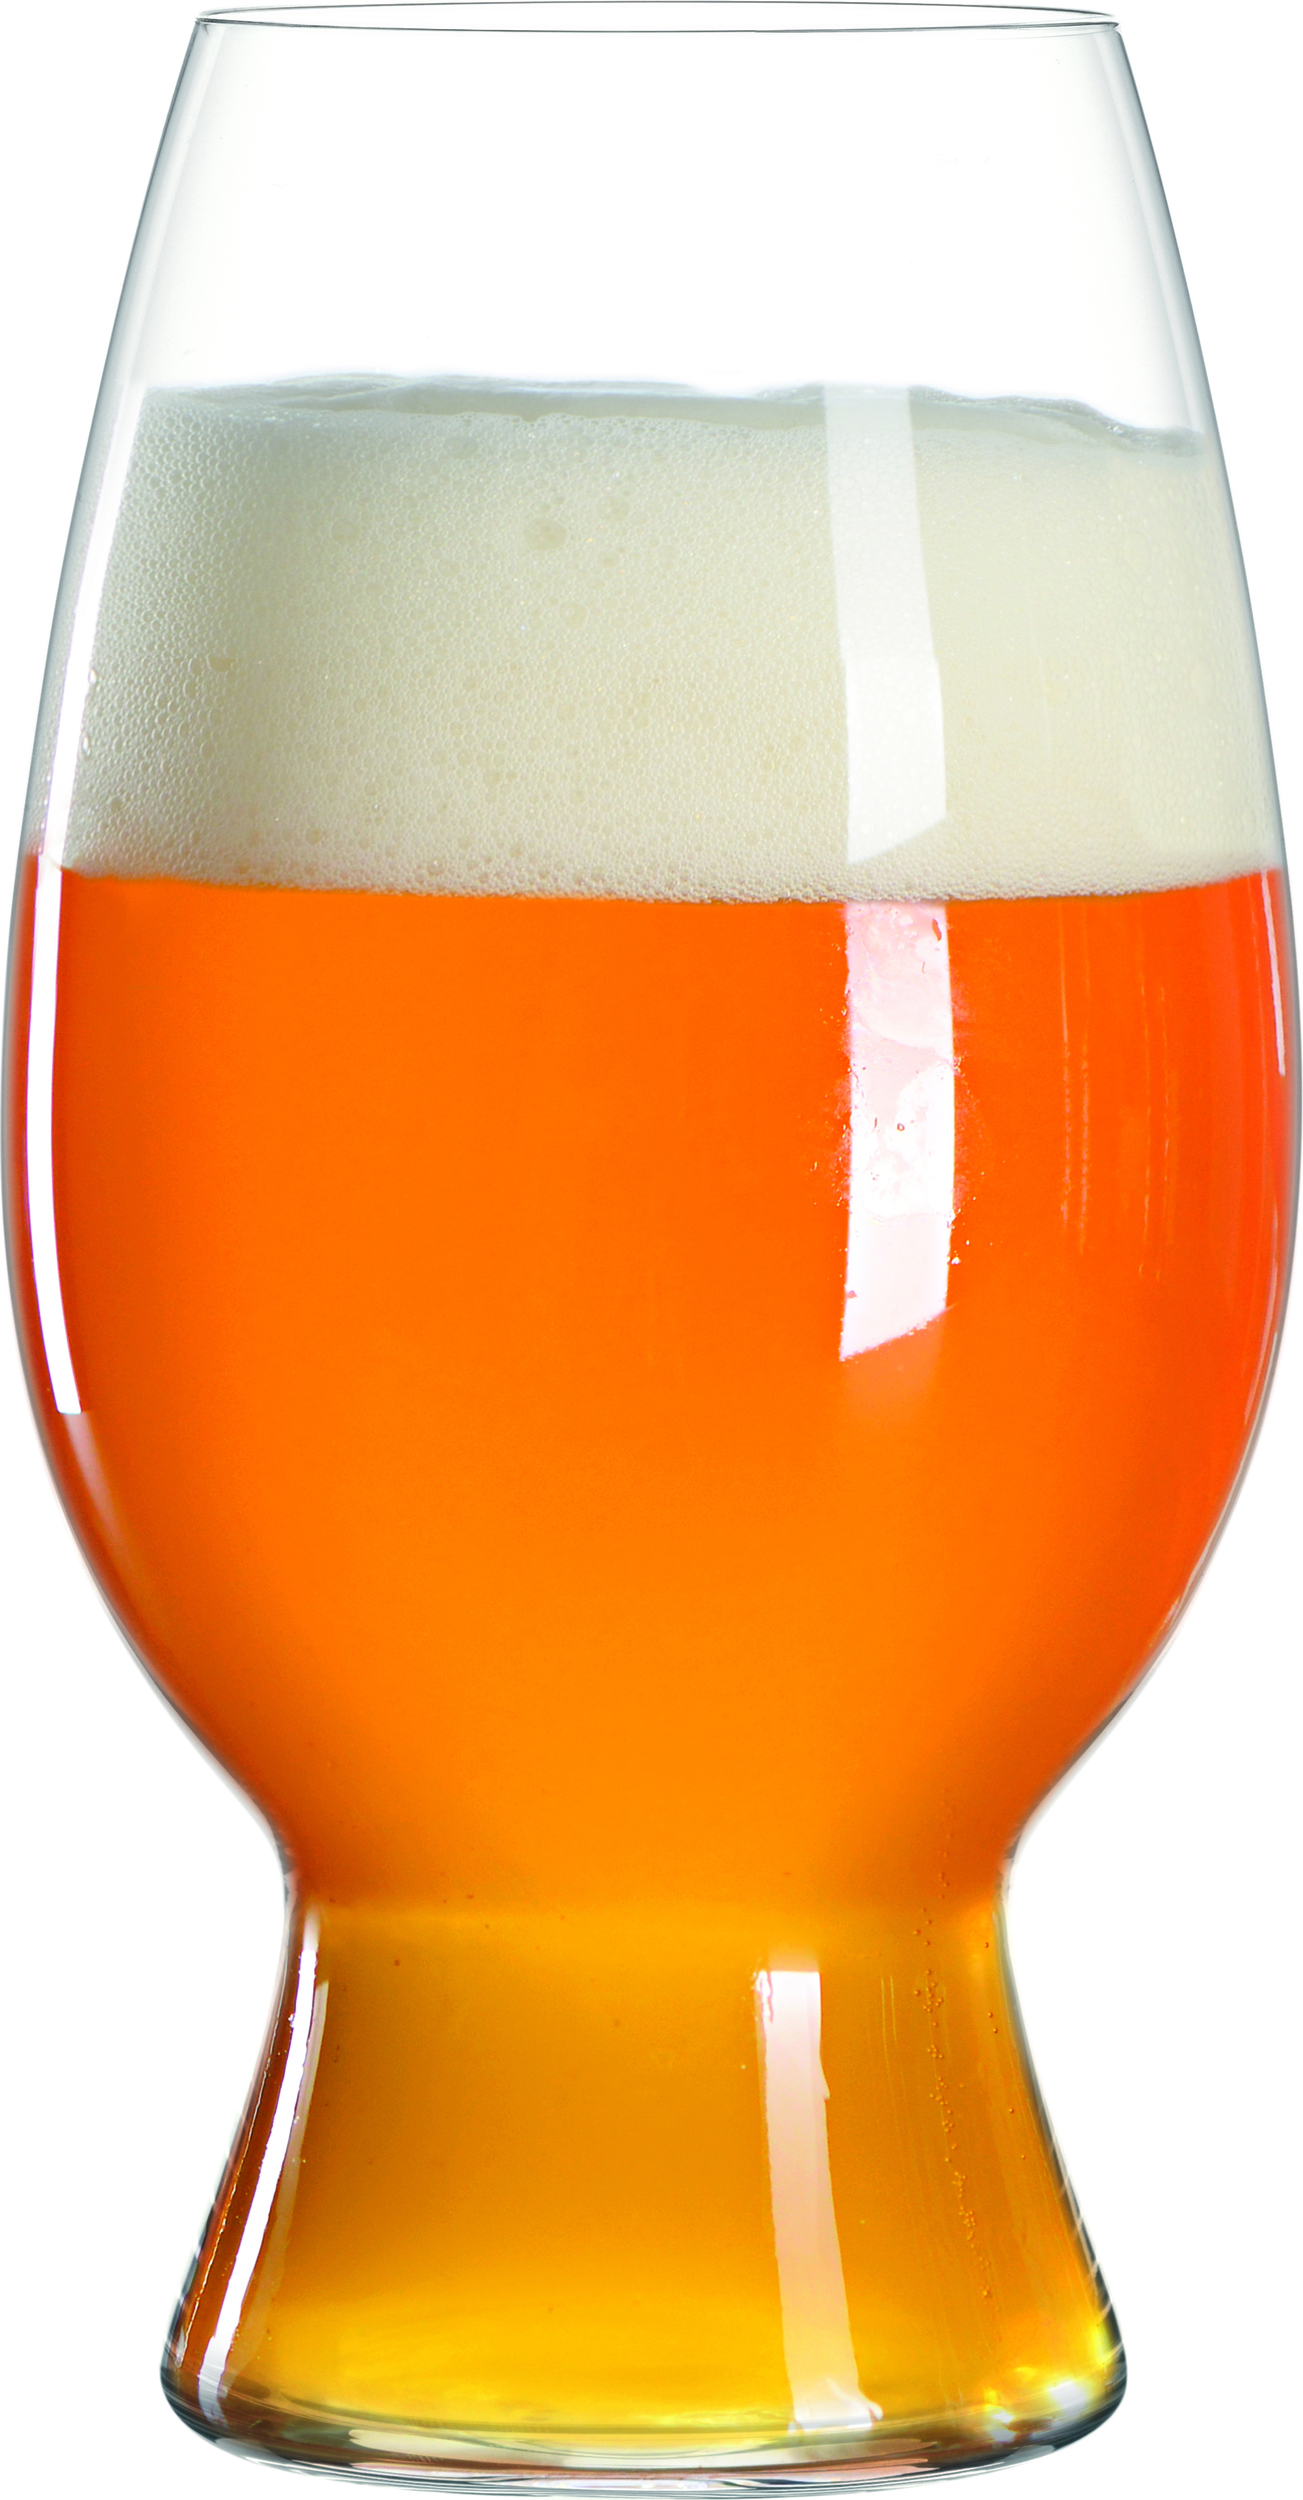 https://3fa-media.com/spiegelau/spiegelau-craft-beer-tasting-set-beer-glasses-3-pcs__69085_03b61f9-s2500x2500.jpg